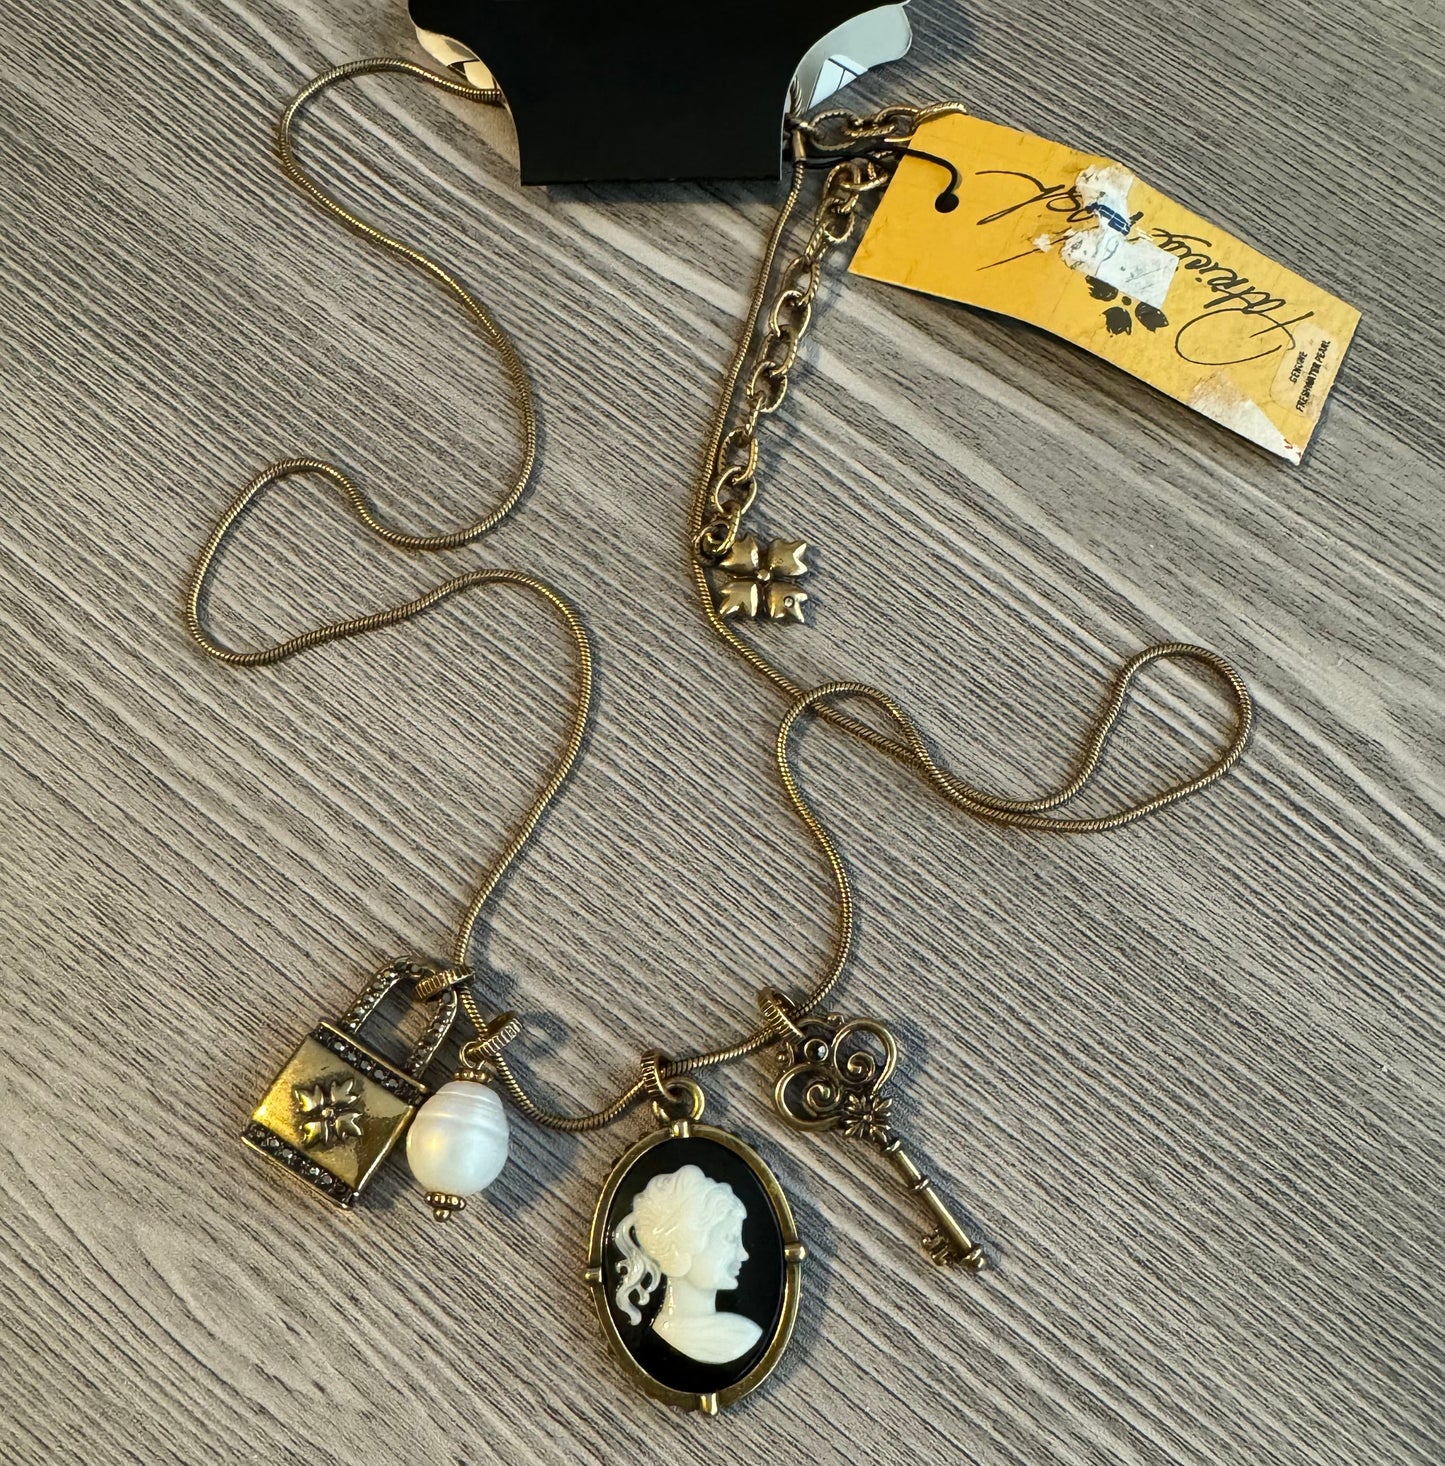 Necklace Pendant By Patricia Nash